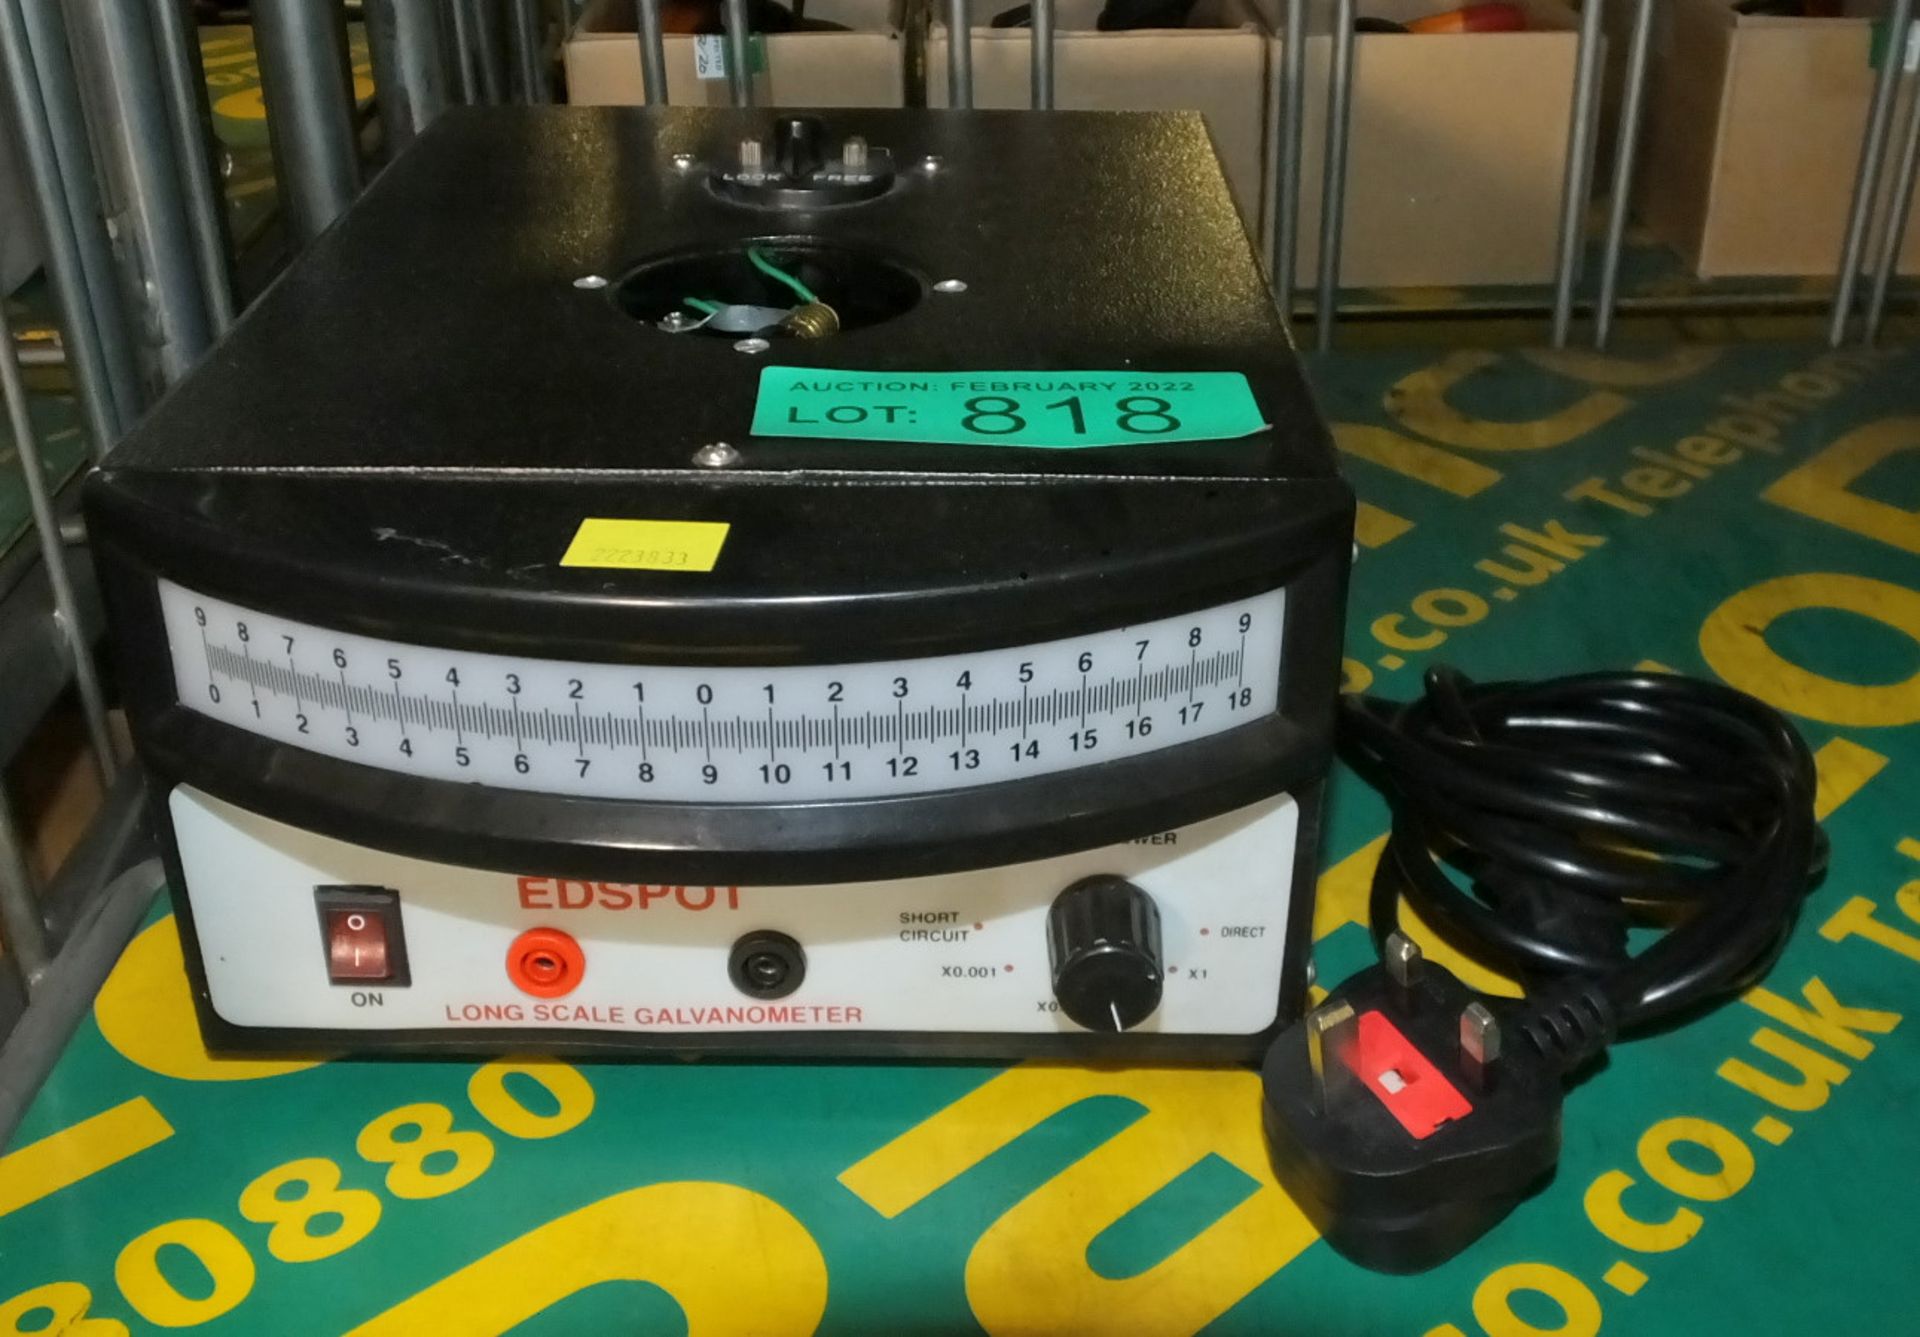 Edspot Long Scale Galvanometer Unit